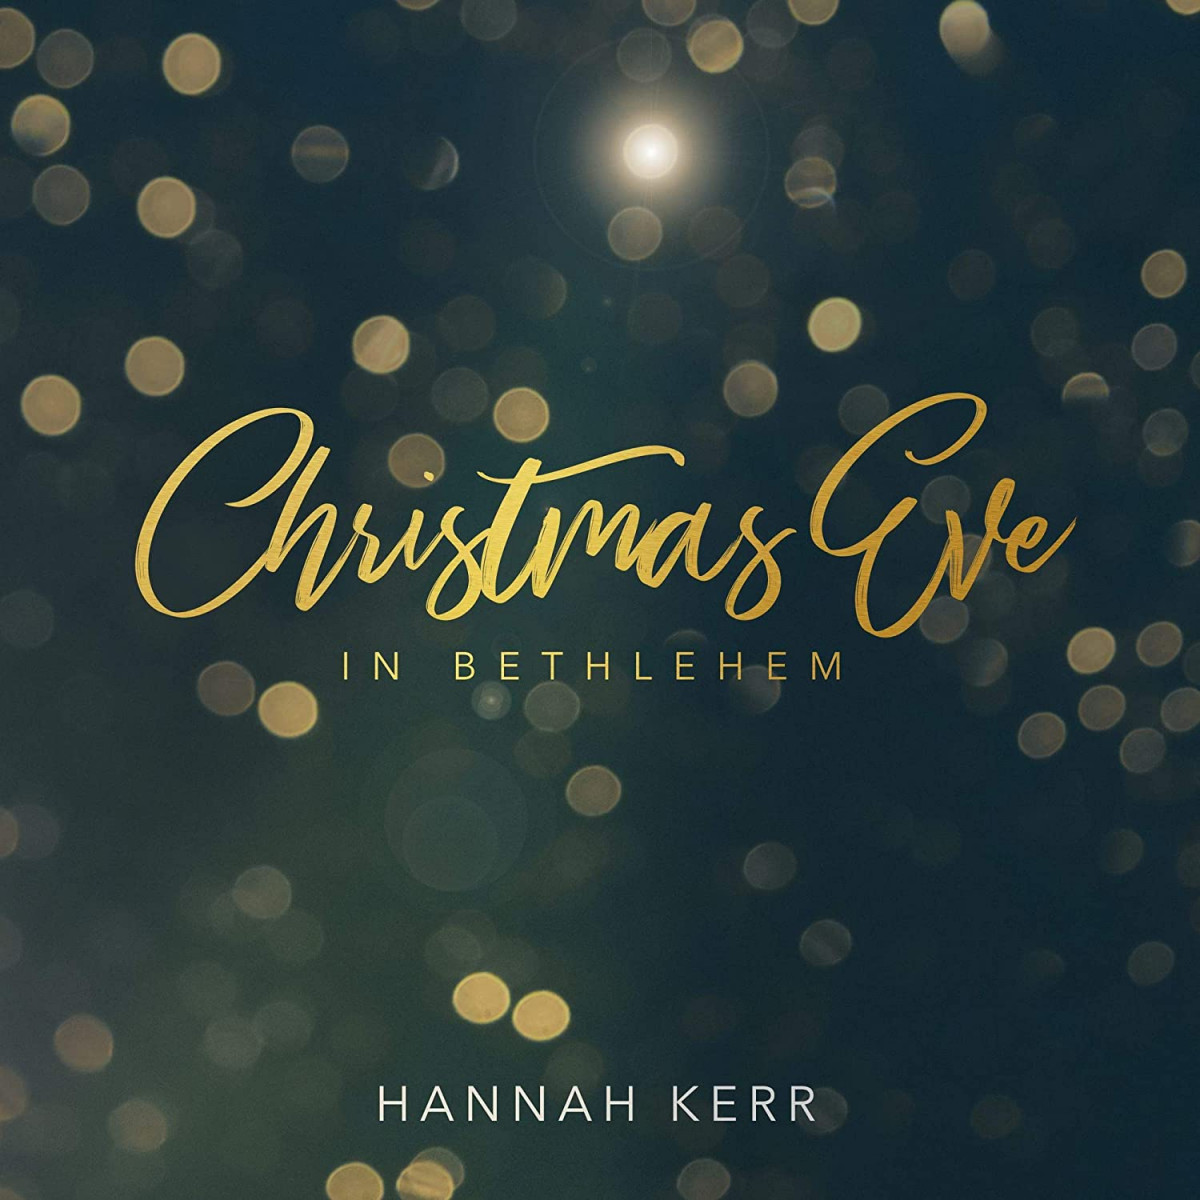 Hannah Kerr - The Christmas song